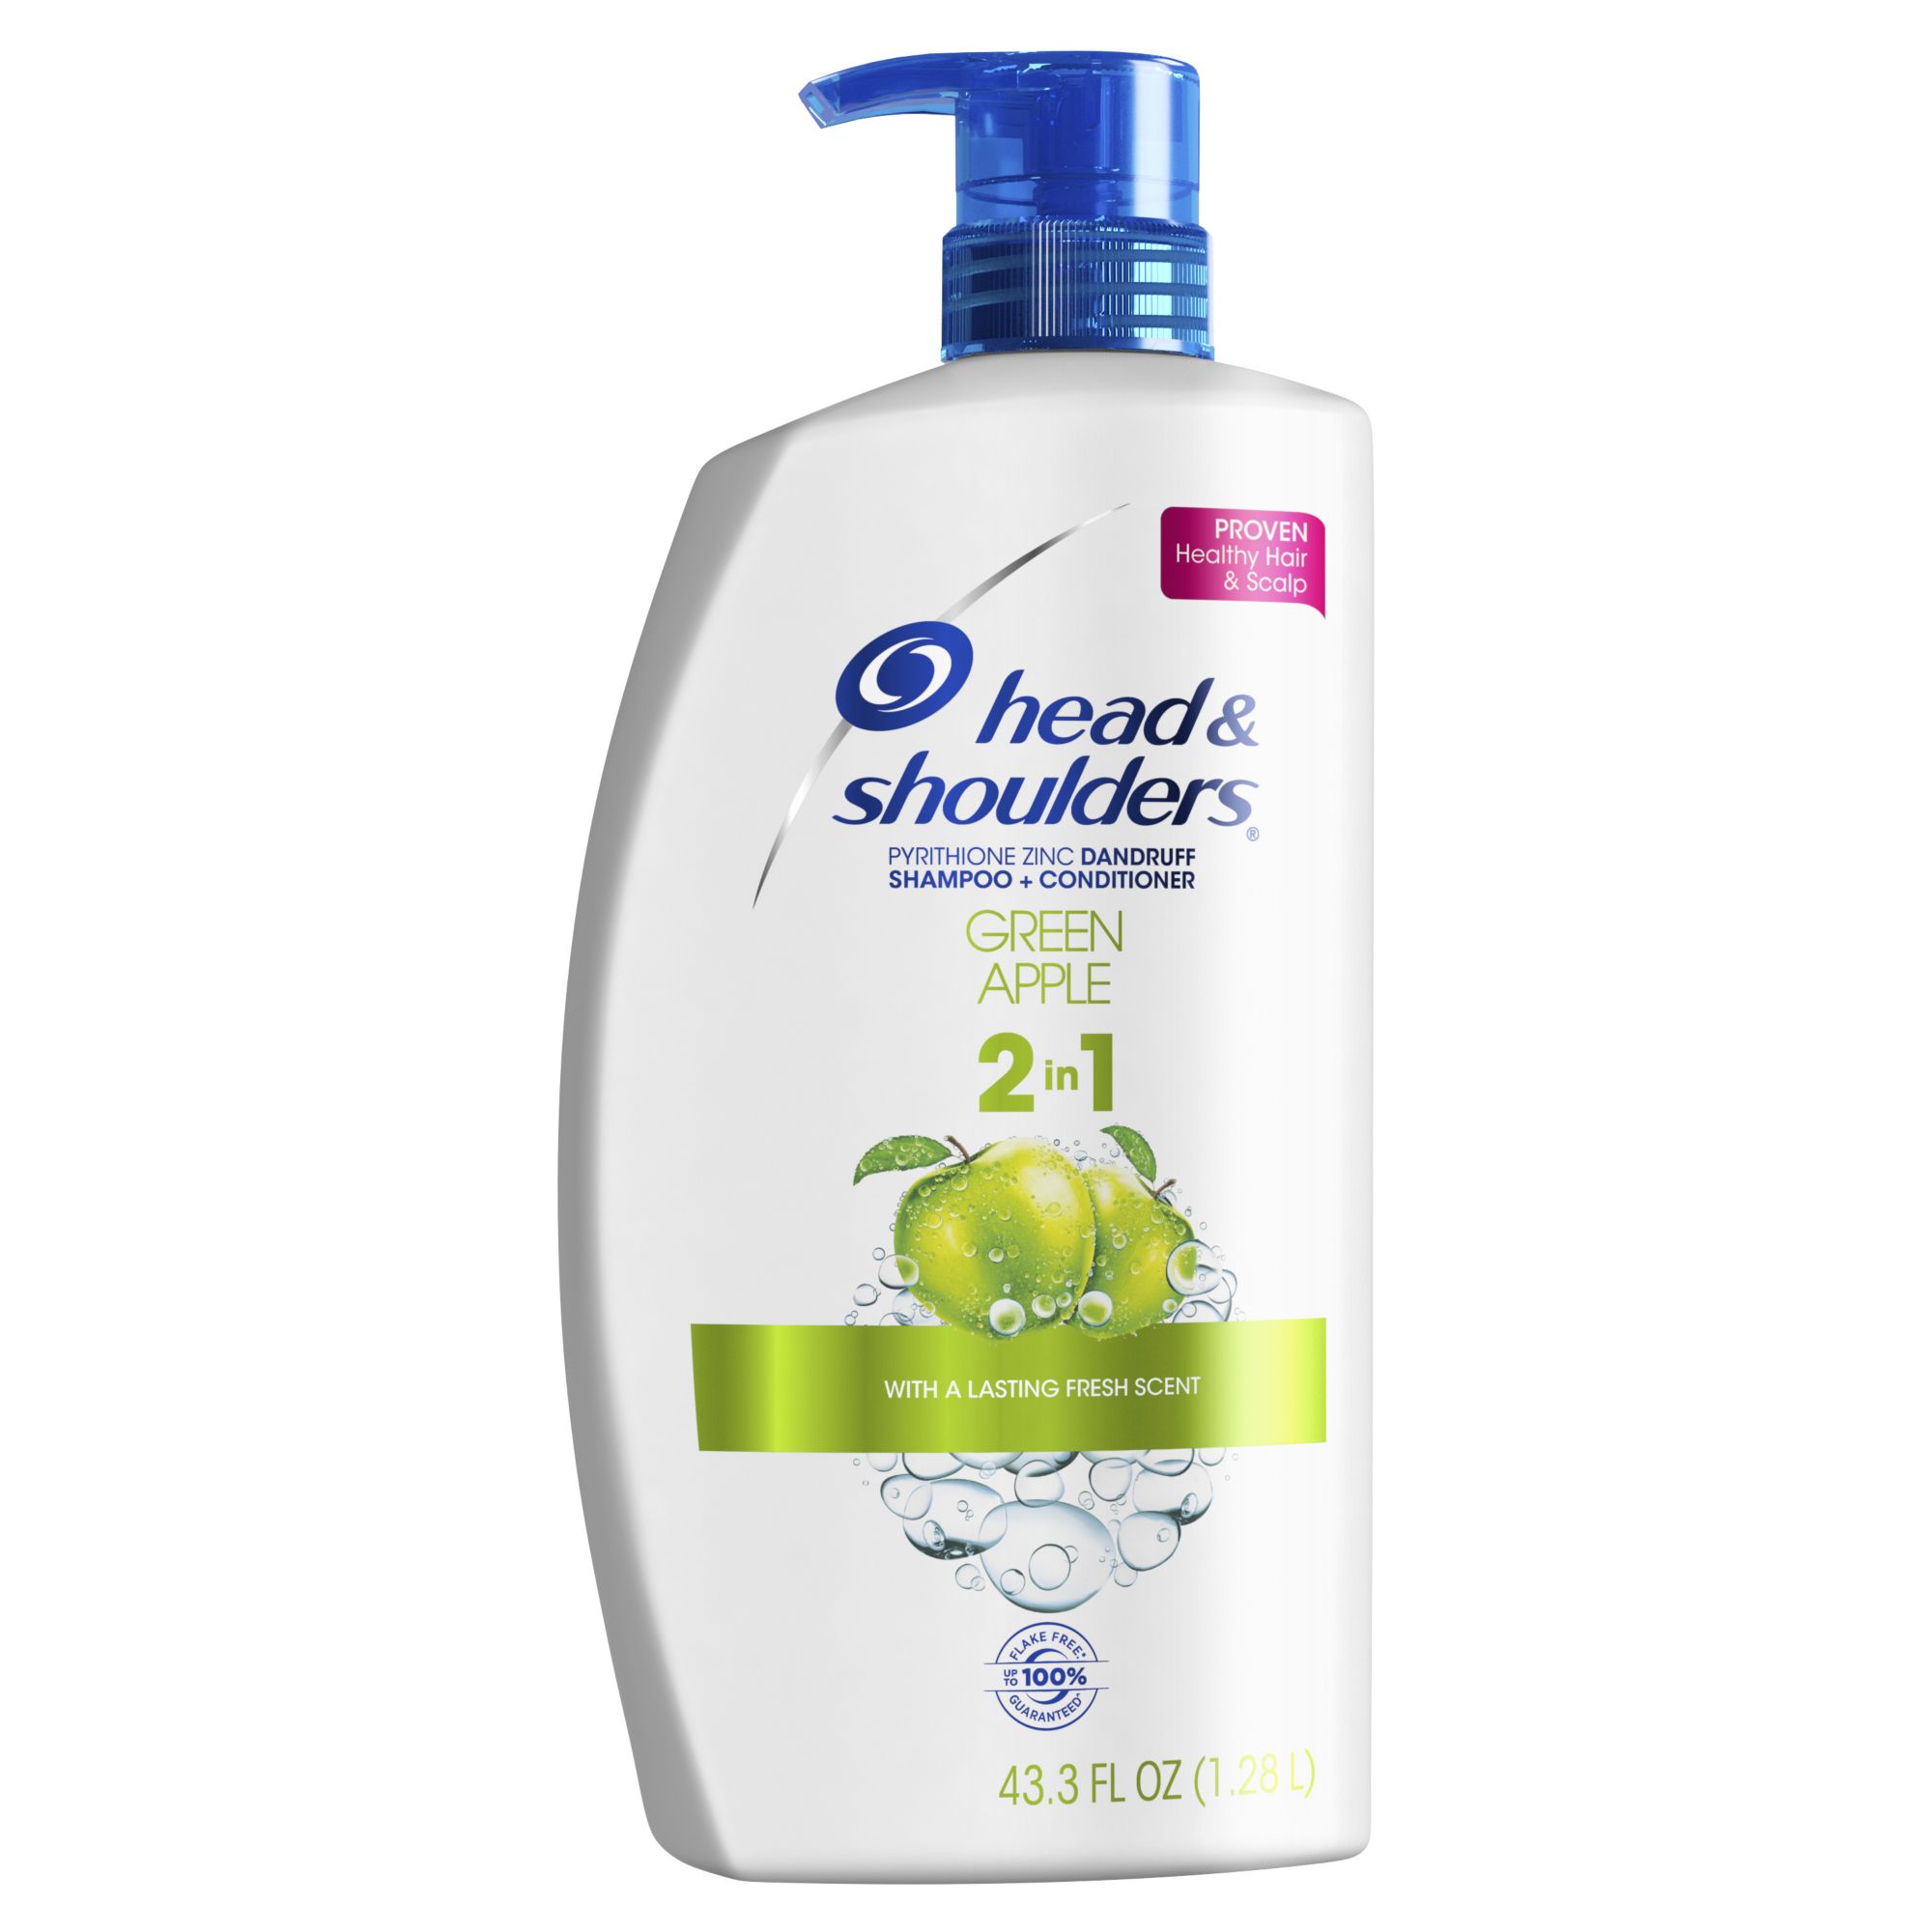 Varen Nietje Susteen Head and Shoulders Green Apple Anti-Dandruff 2 in 1 Shampoo and  Conditioner, 43.3 fl. oz. - BJs WholeSale Club